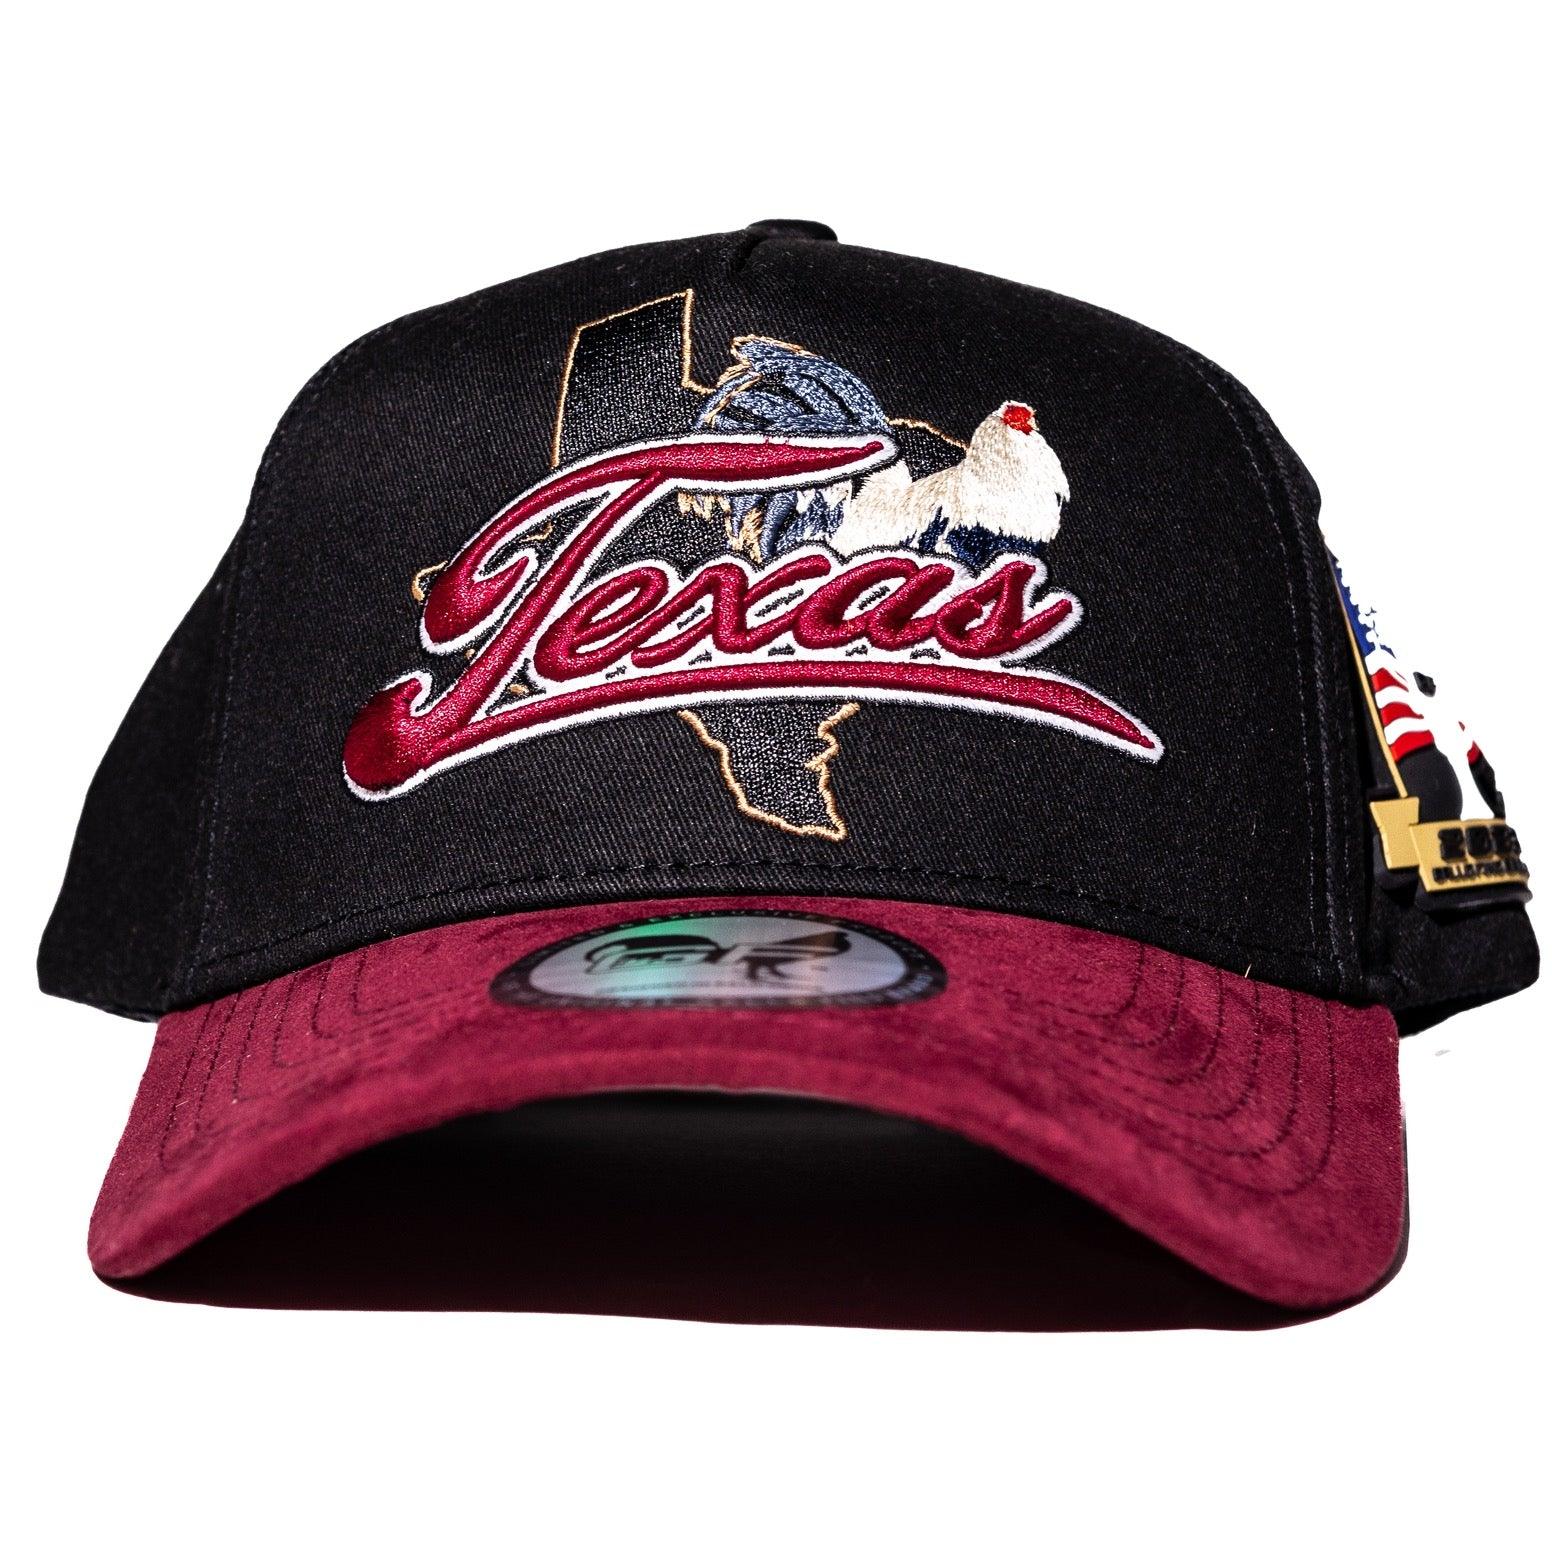 Gallo Fino “Texas” hat - BeisbolMXShop